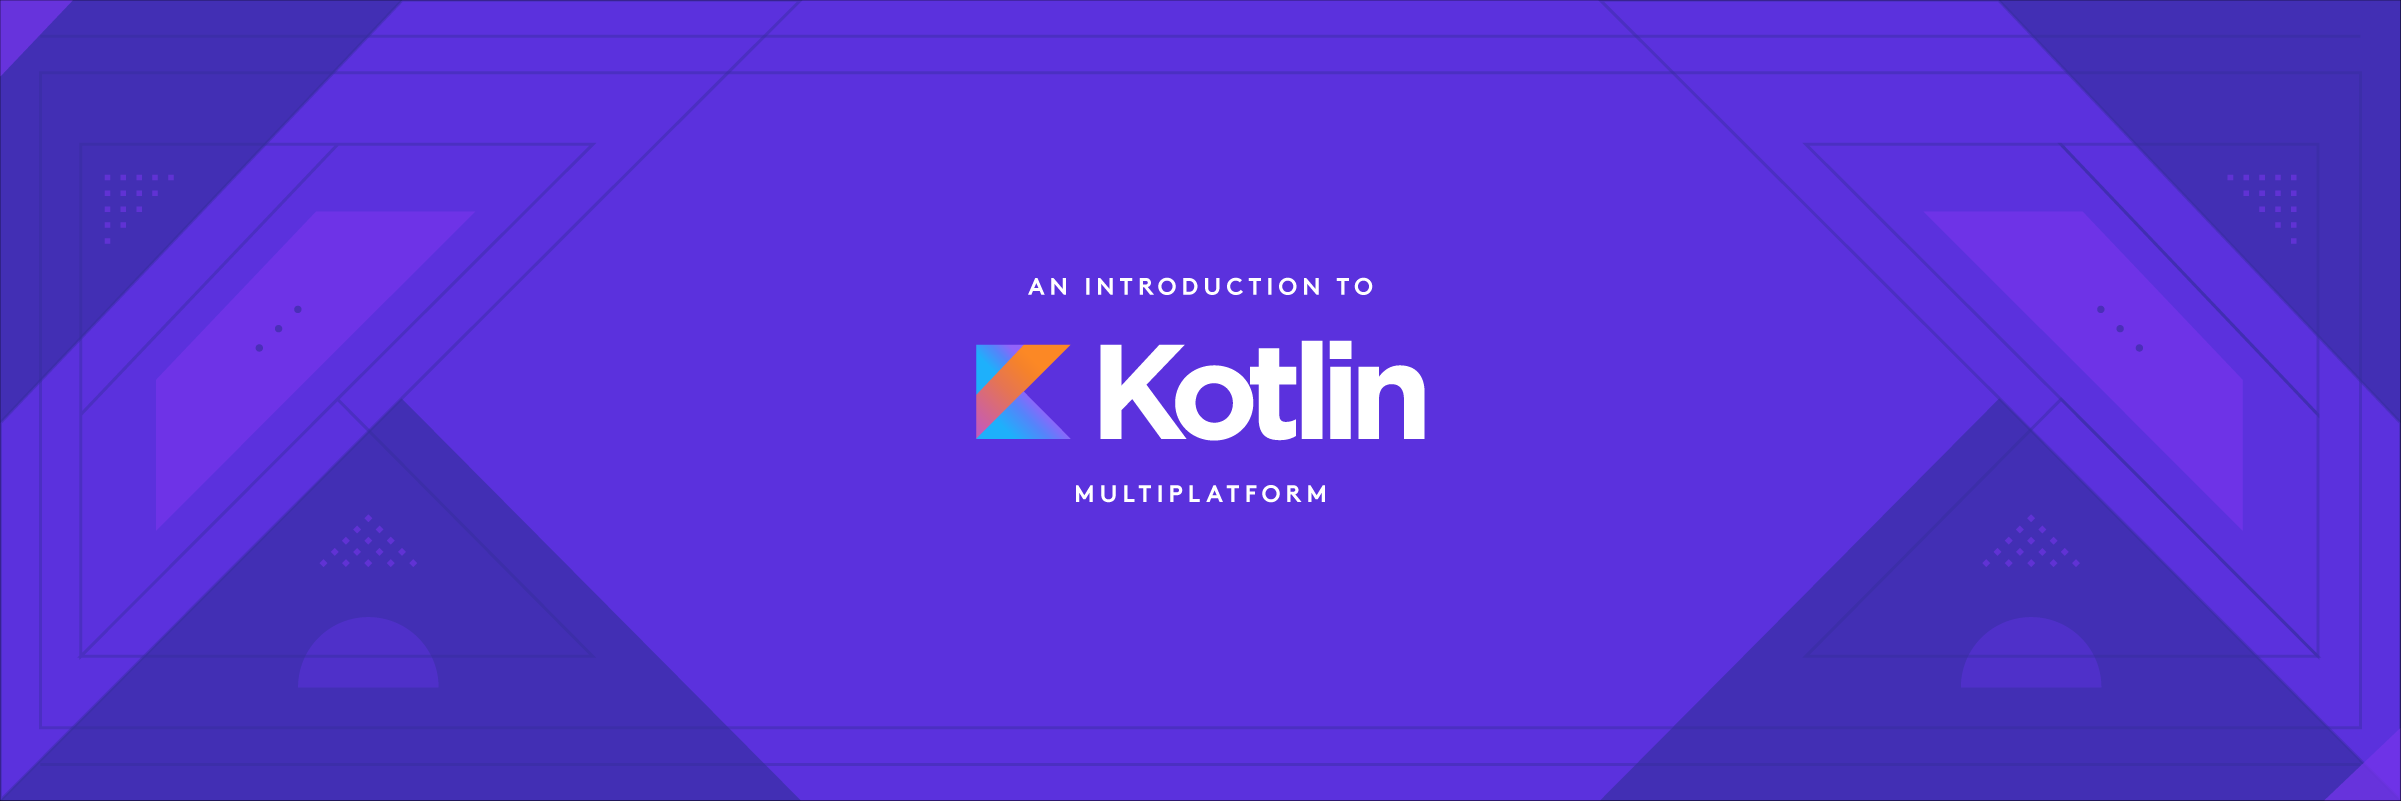 Kotlin Multiplatform Has Become Trend For Cross-Platform App Development